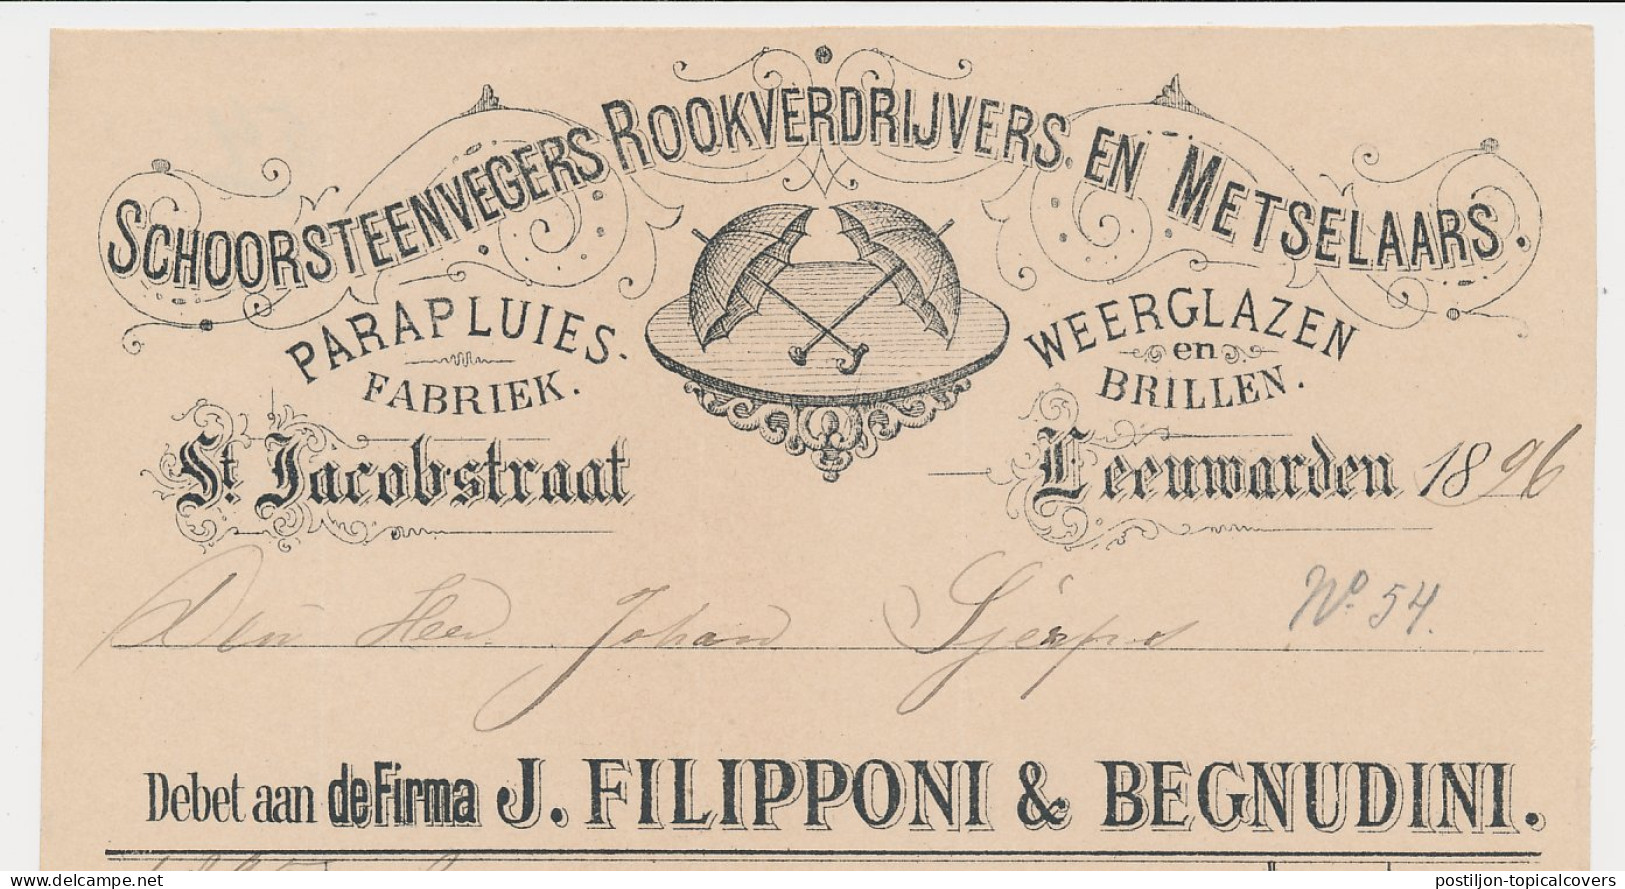 Nota Leeuwarden 1896 - Parapluies - Weerglazen - Brillen - Holanda